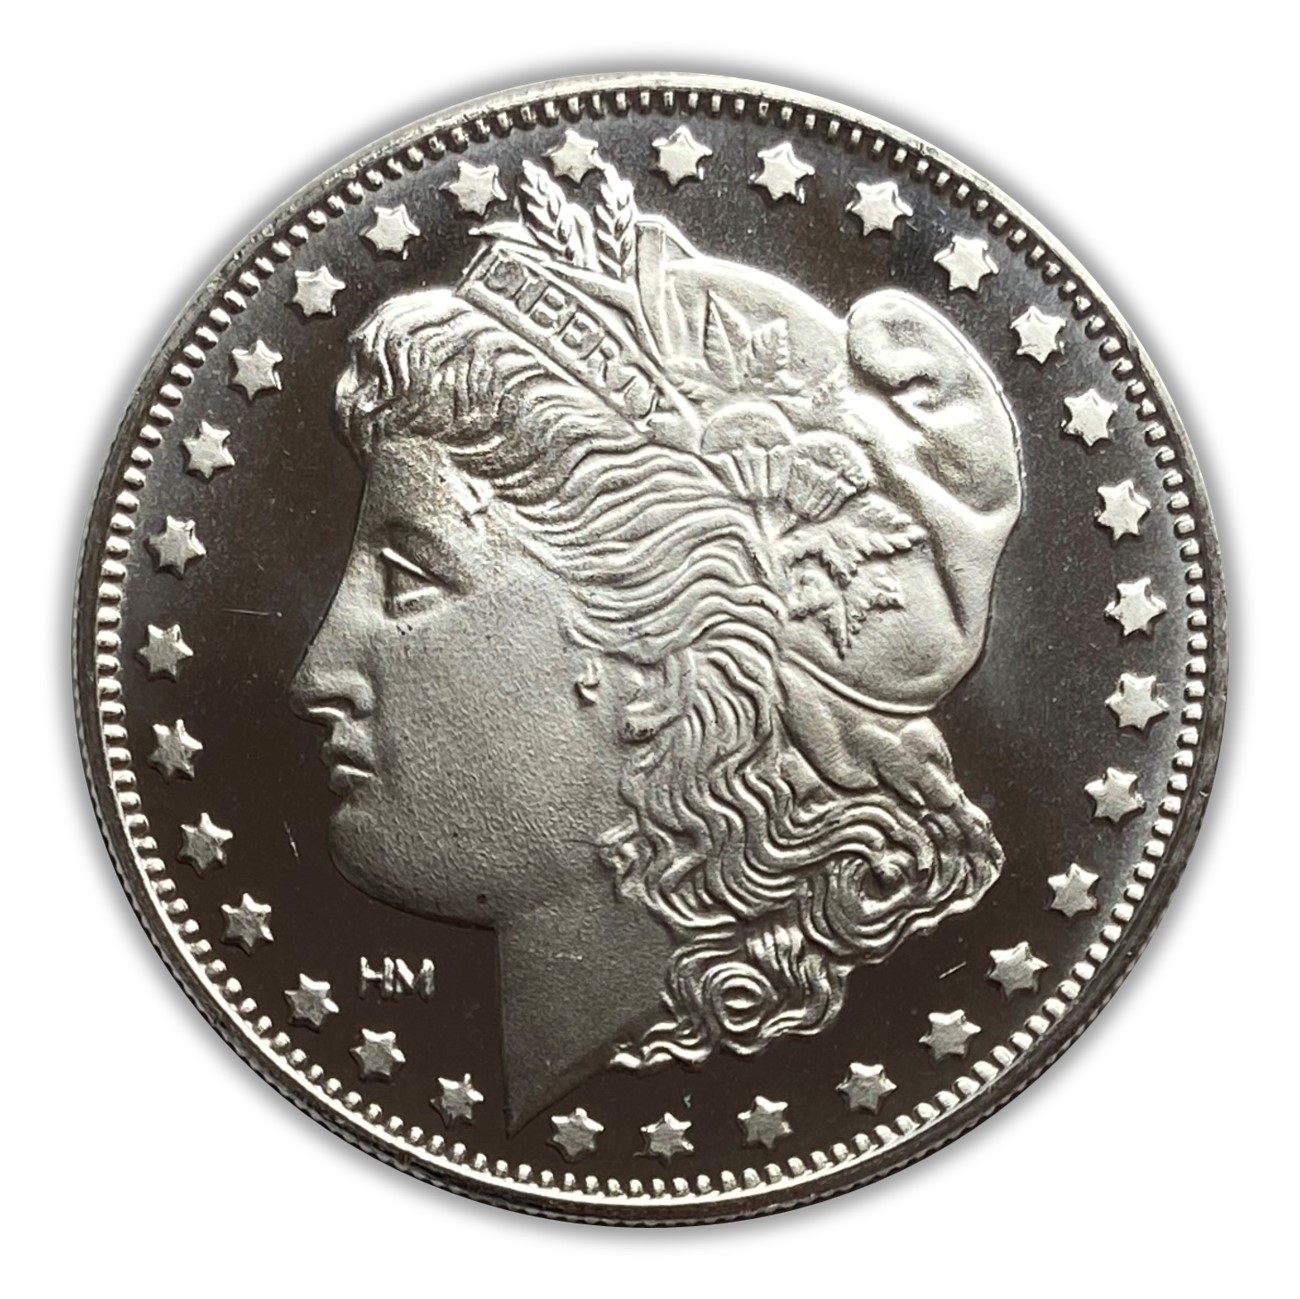 Morgan Dollar Design 1 oz Silver Round